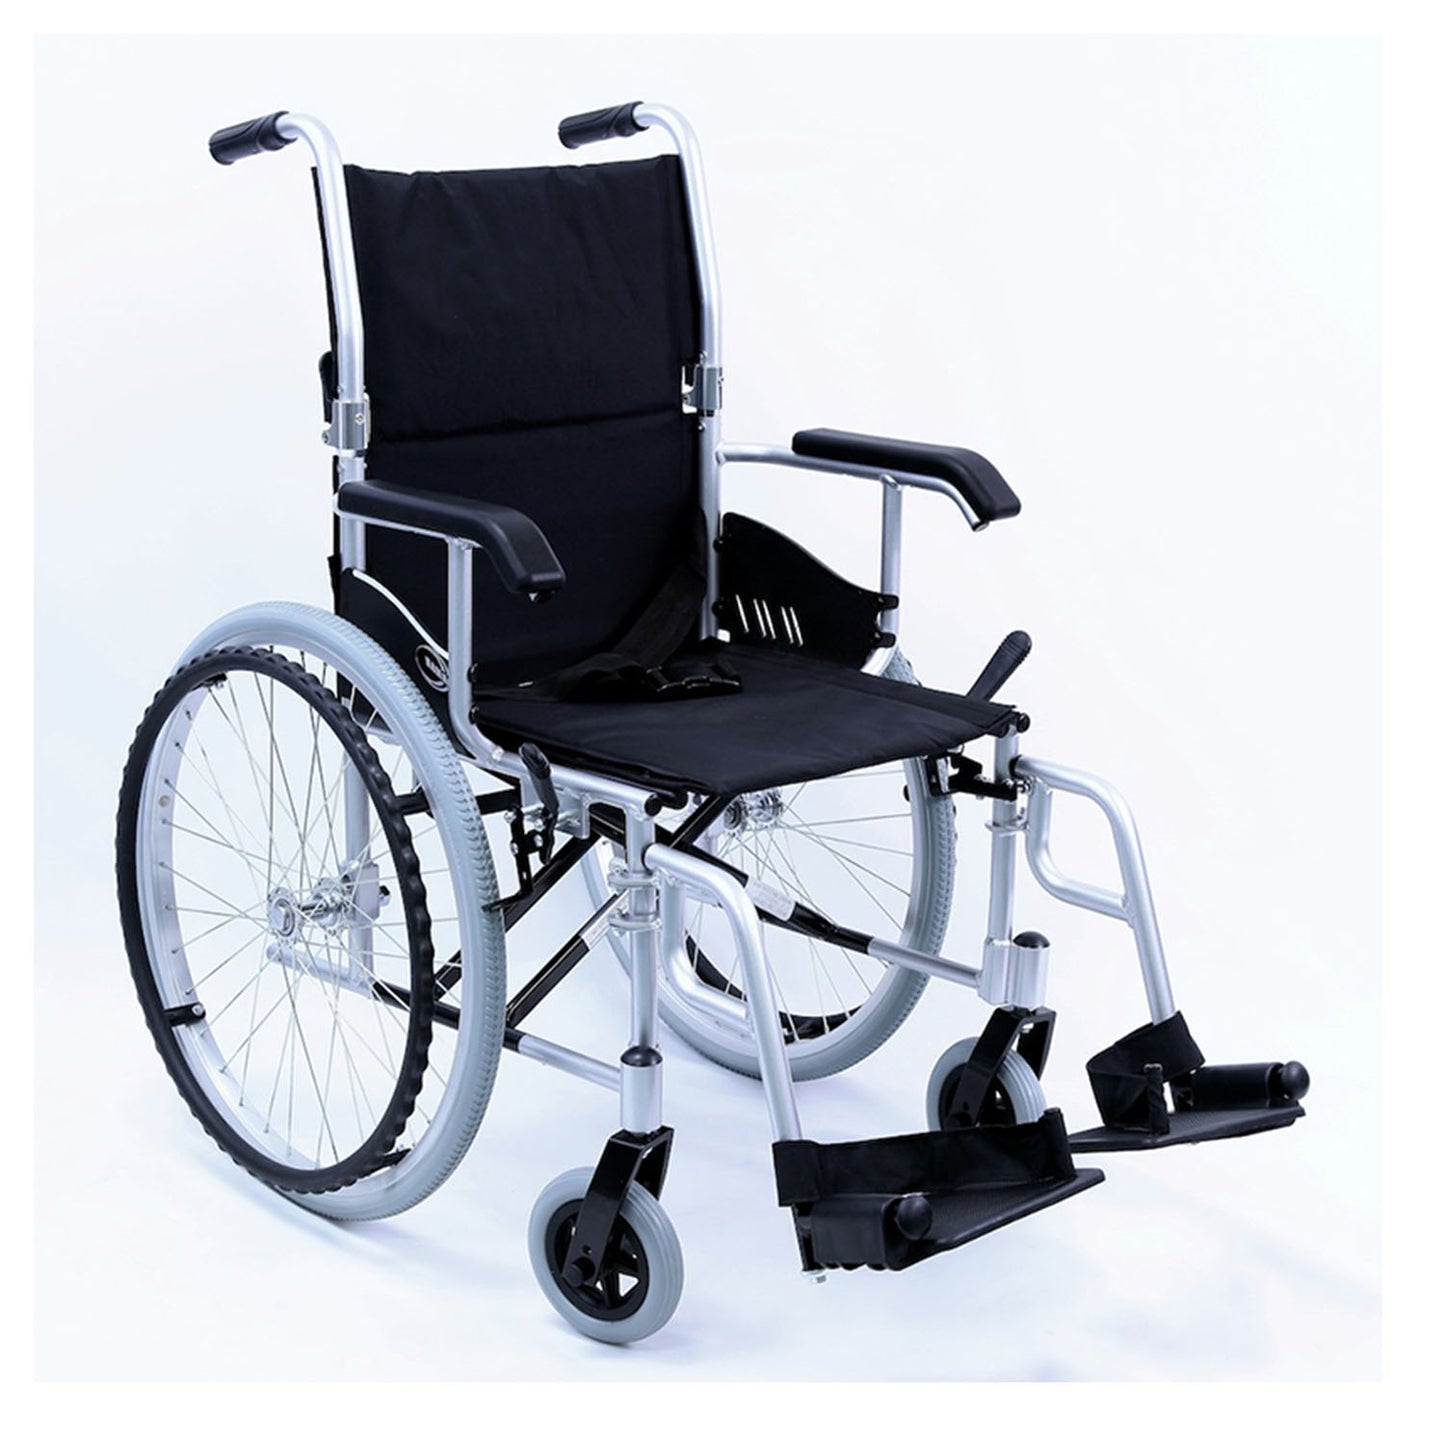 Karman LT-980 18 inch Seat 24 lbs. Ultra Lightweight Wheelchair with Elevating Legrest in Silver